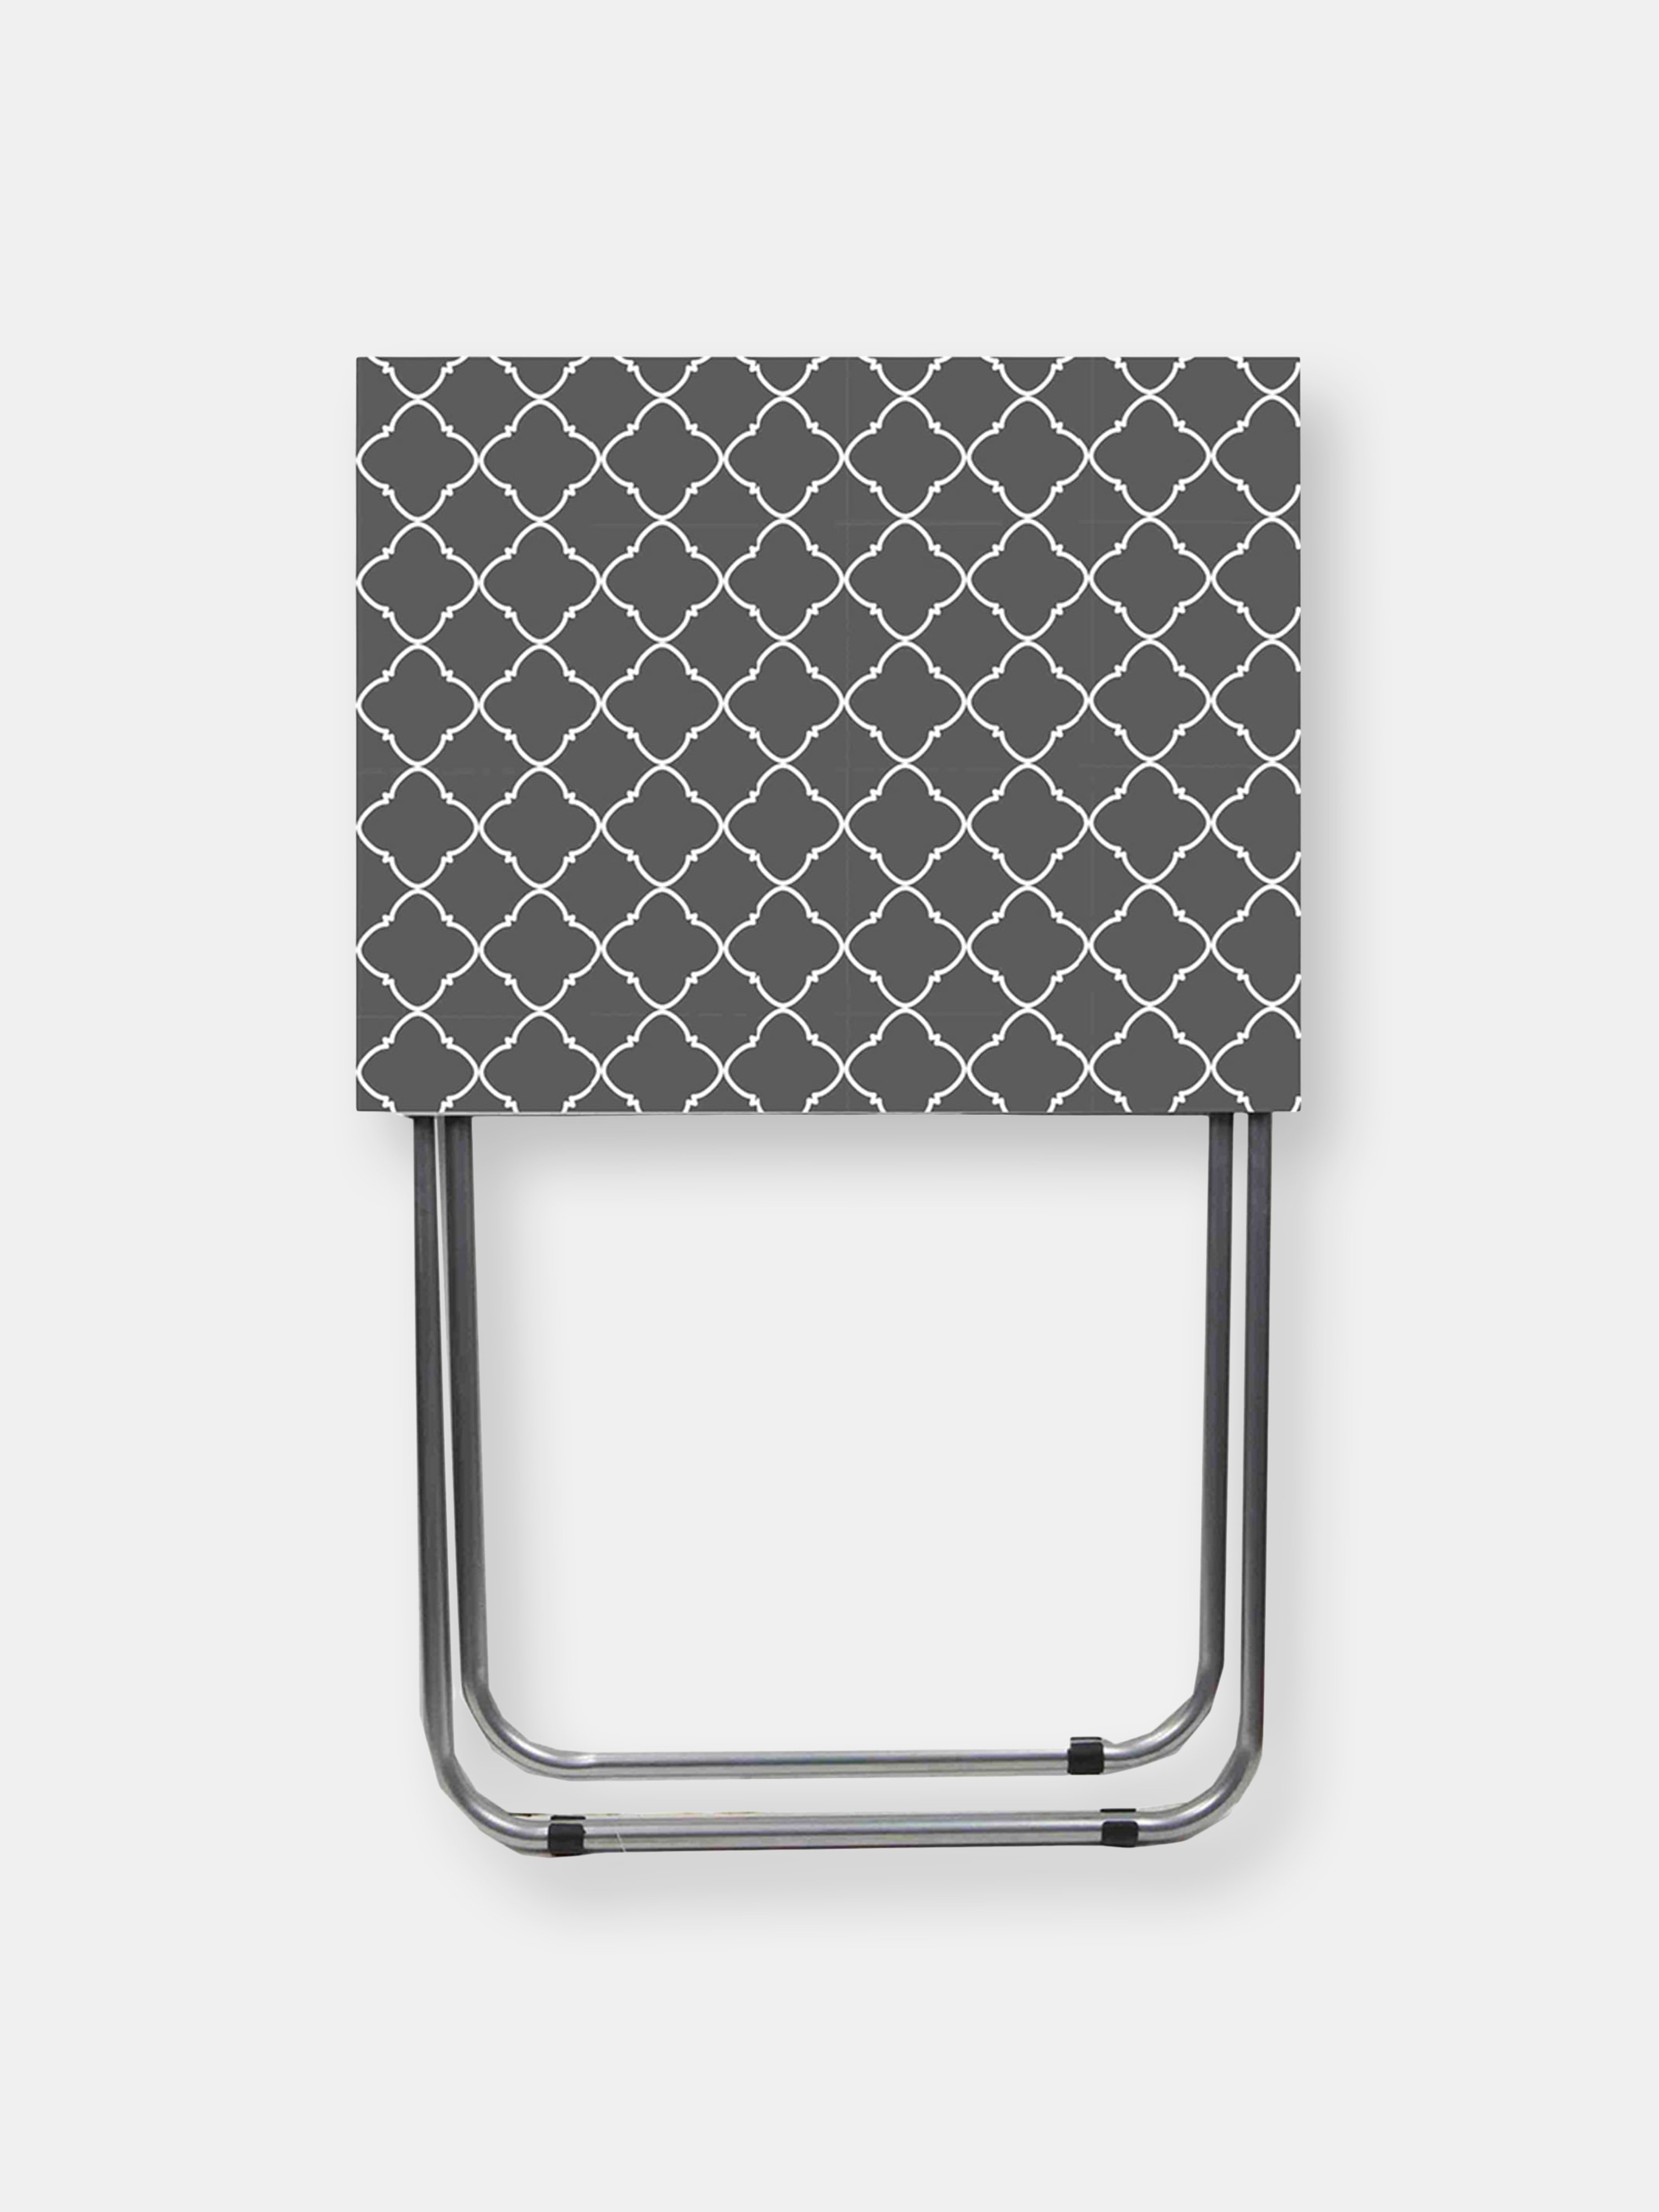 Home Basics Lattice Grey and White Multi-Purpose Foldable Table 